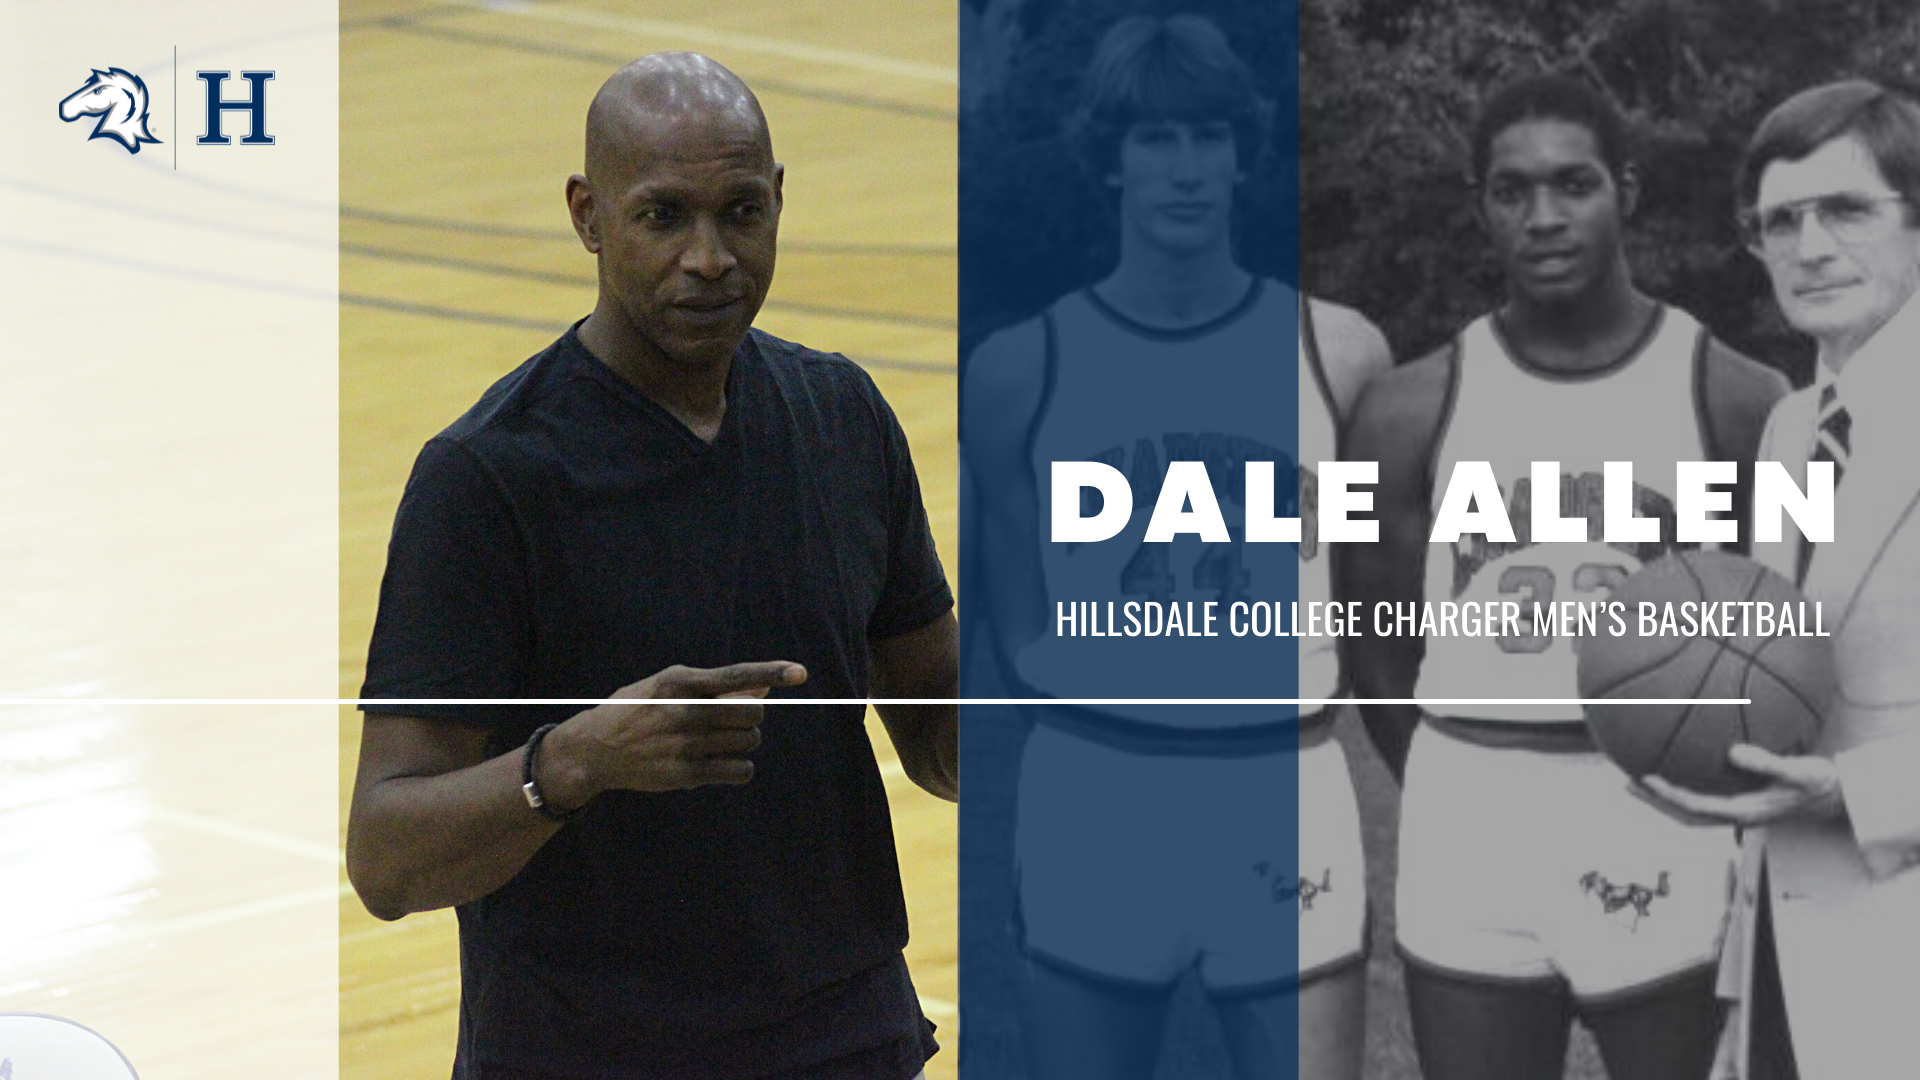 Charger legend Dale Allen ('81) shares his wisdom at Charger men's basketball Elite Camp